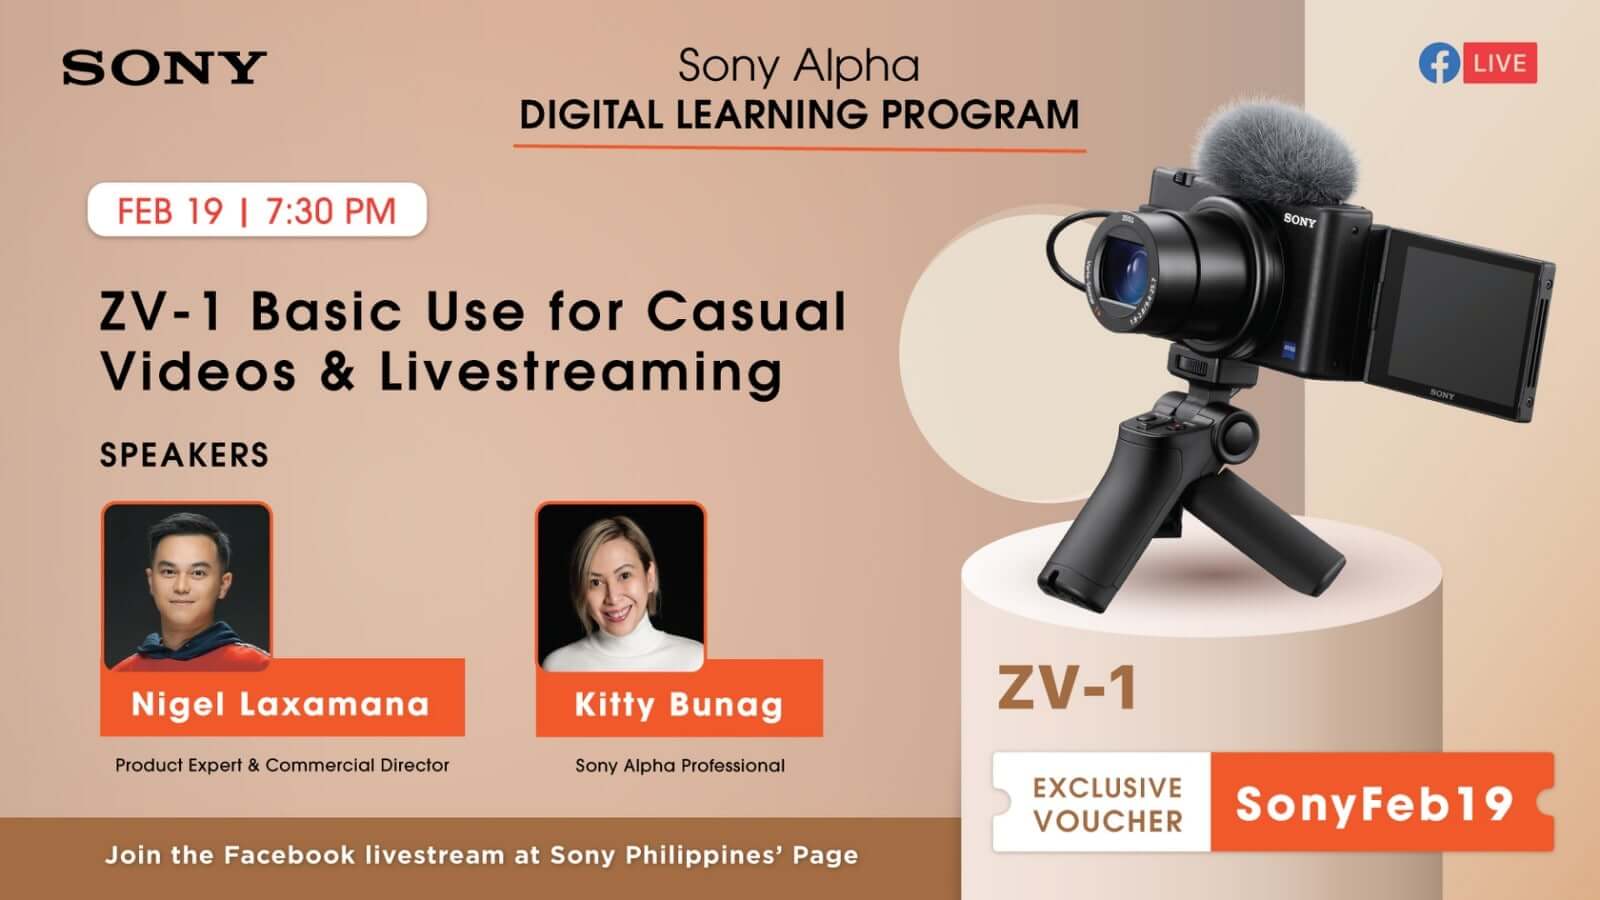 Sony Philippines Announces February Webinars as Part of Digital Learning Program